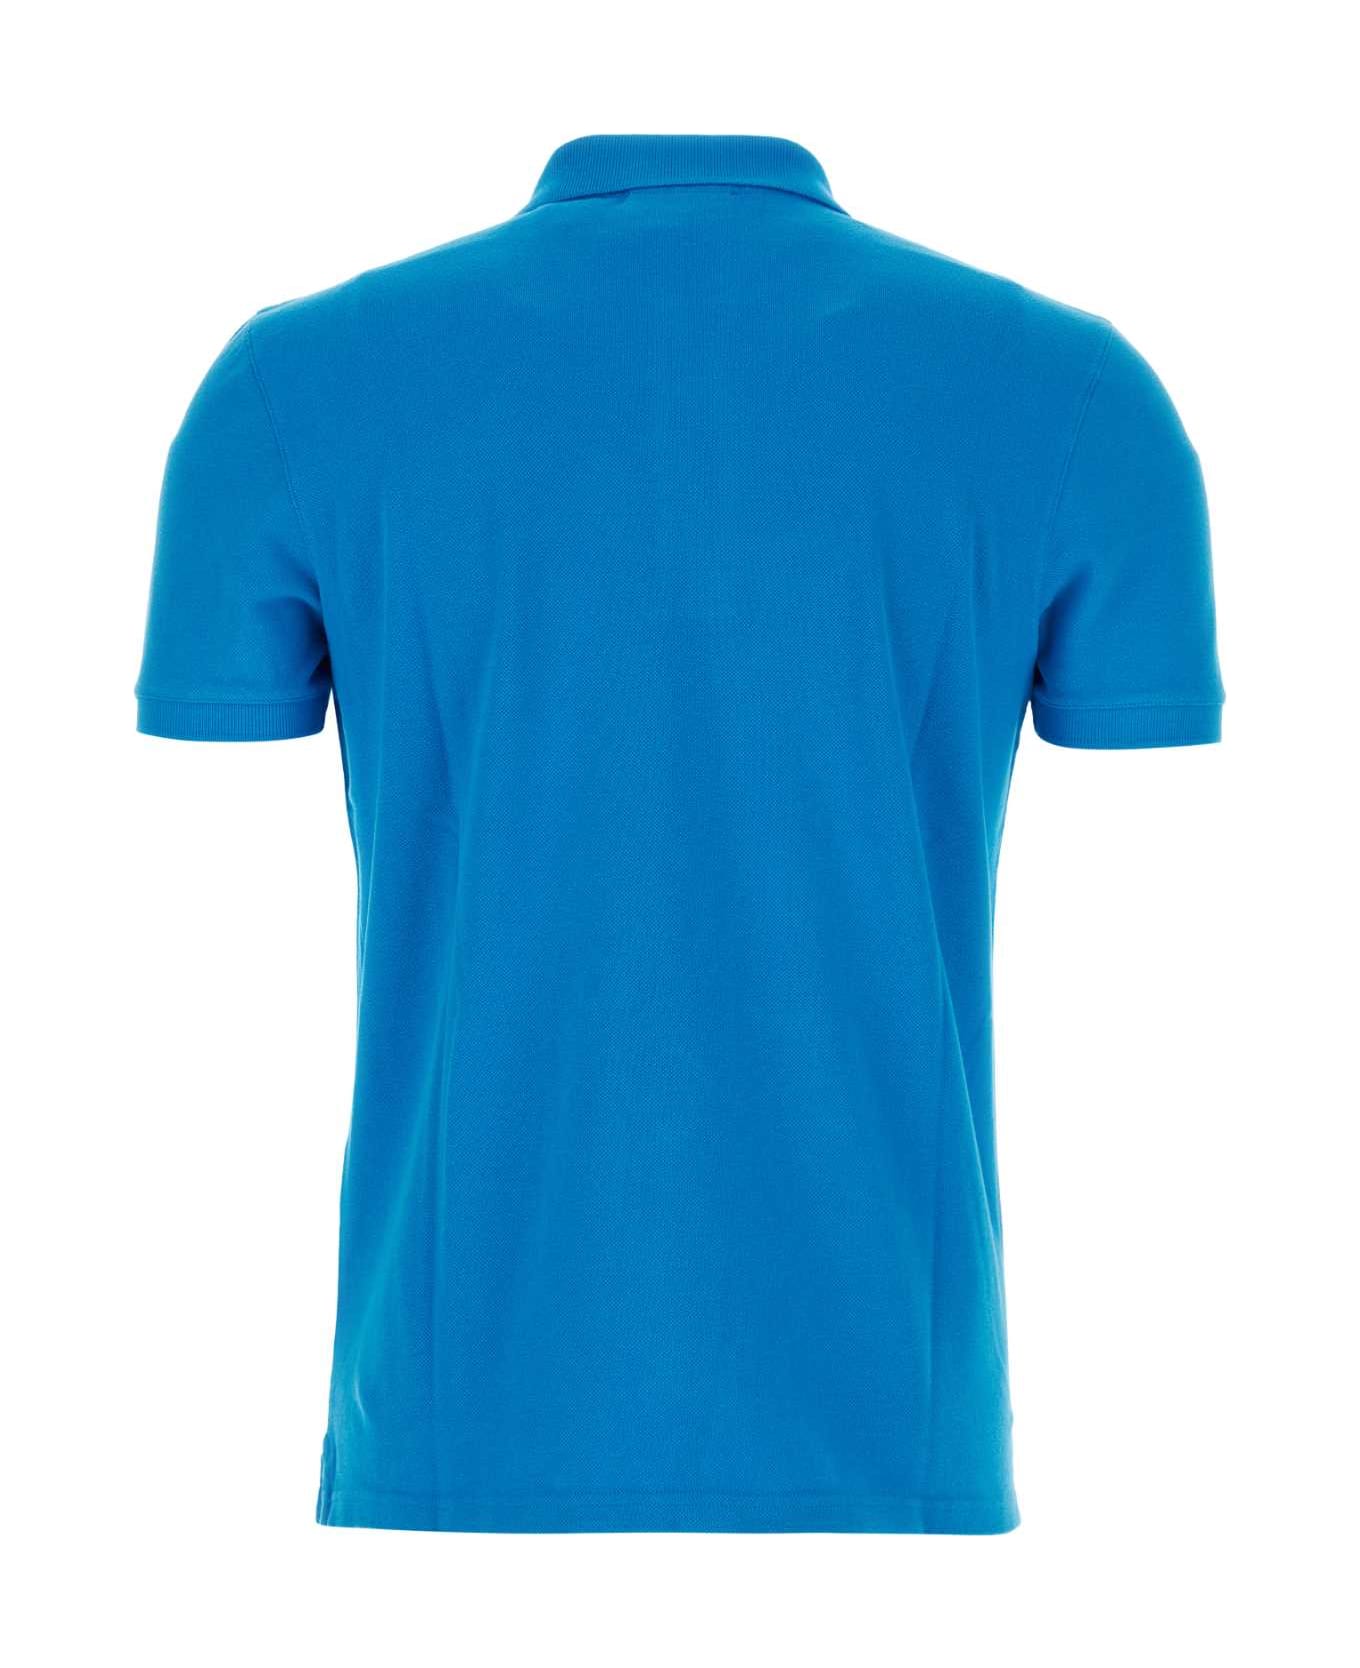 Maison Kitsuné Turquoise Piquet Polo Shirt - ENAMELBLUE ポロシャツ